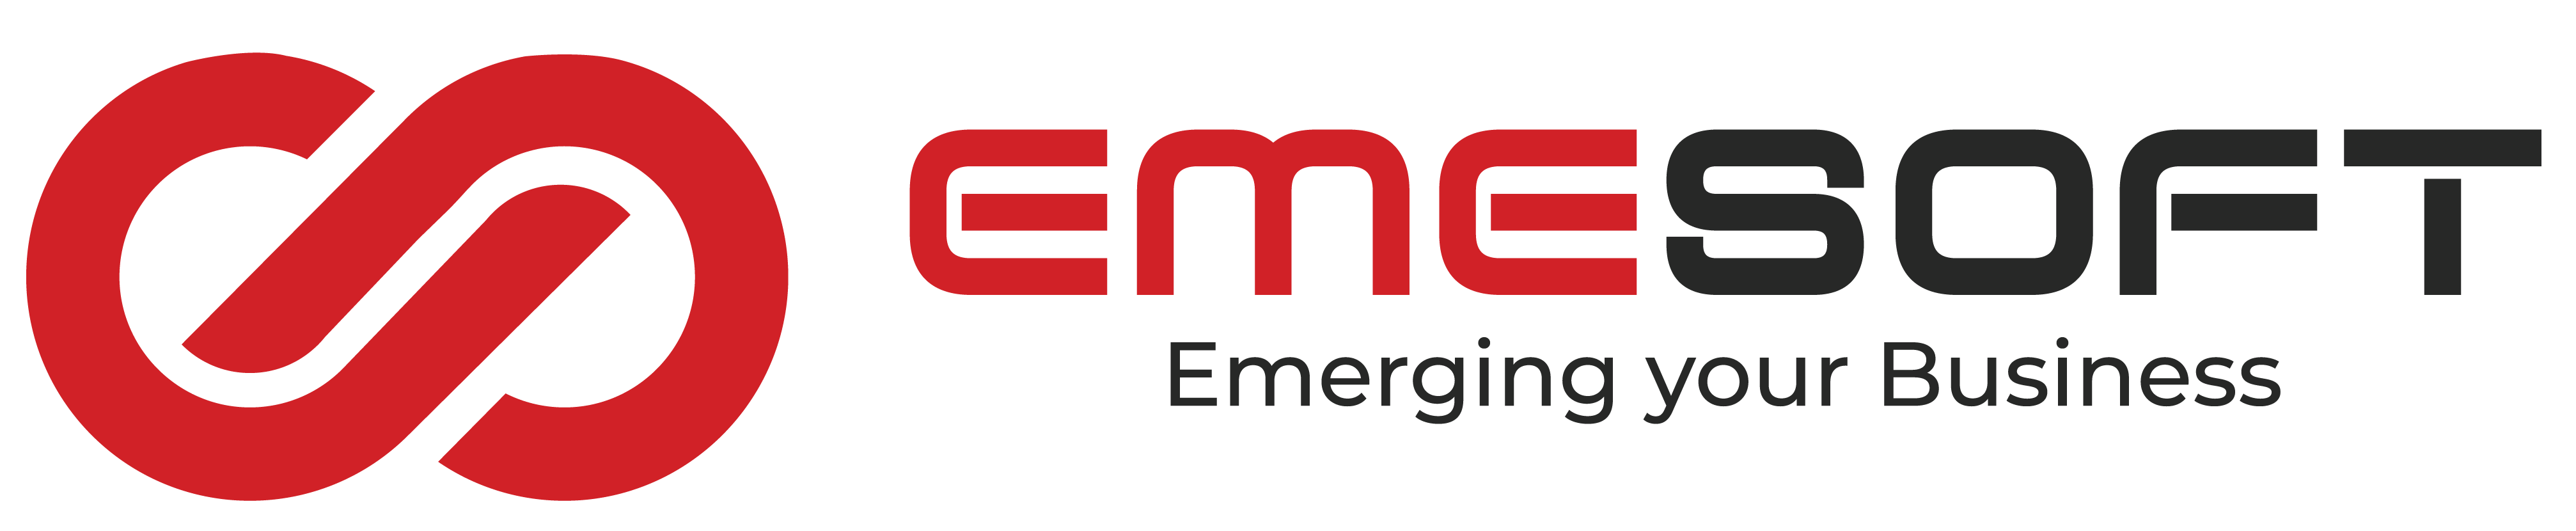 EMESOFT-Logo-Full-Horizontal